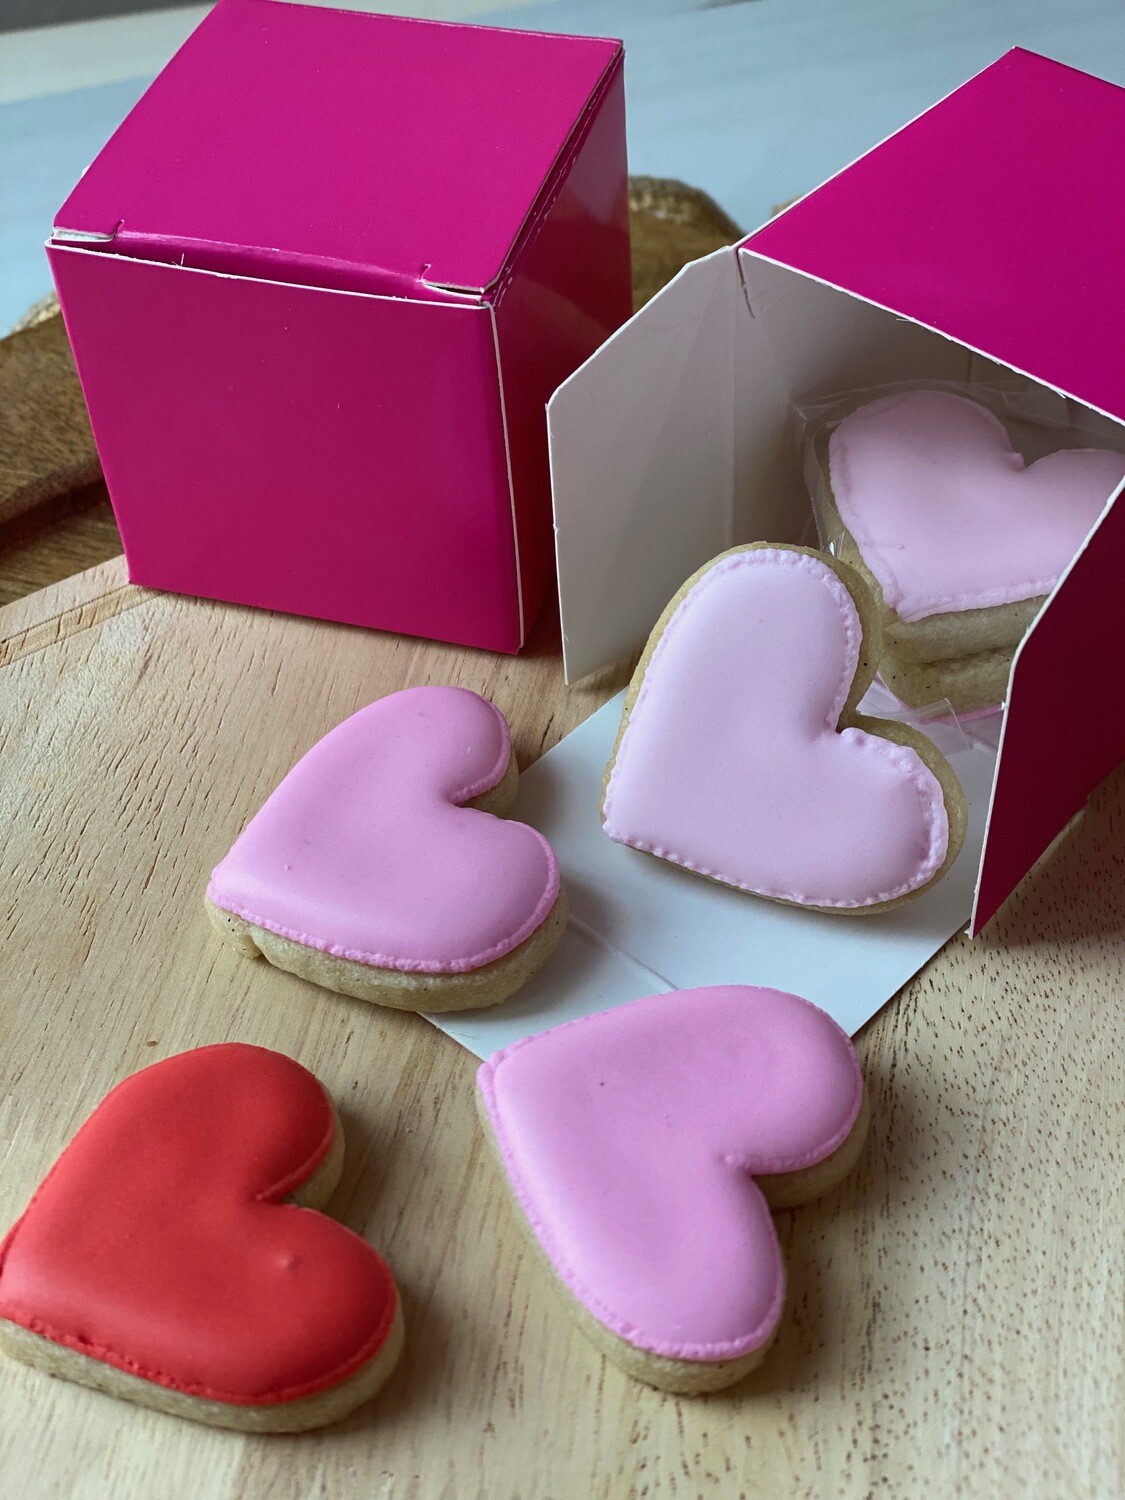 Share a box of Love